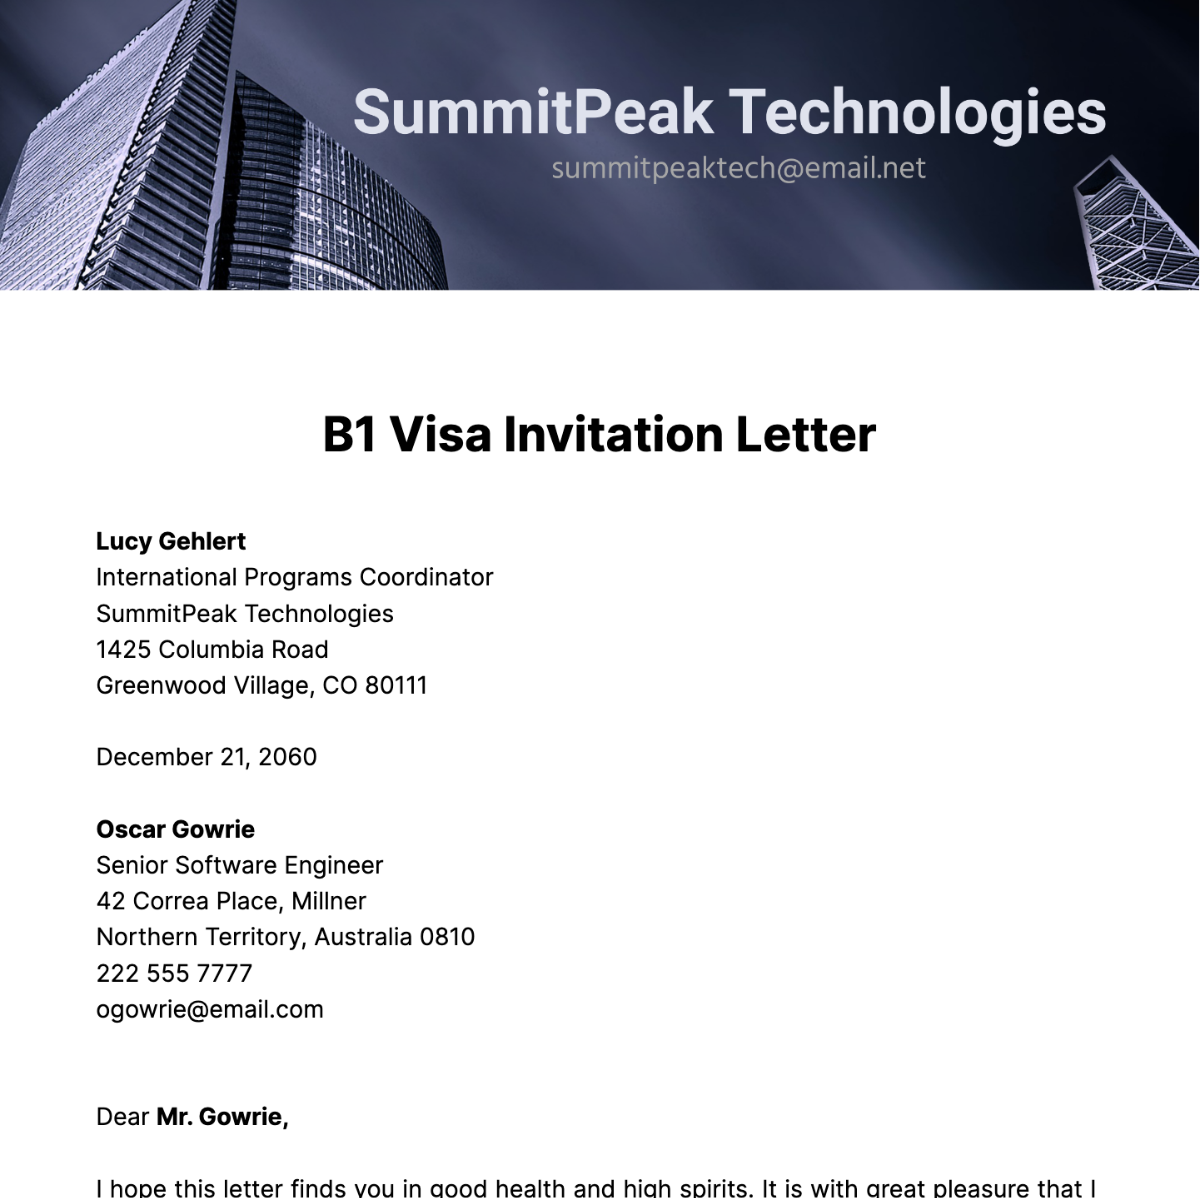 B1 Visa Invitation Letter Template